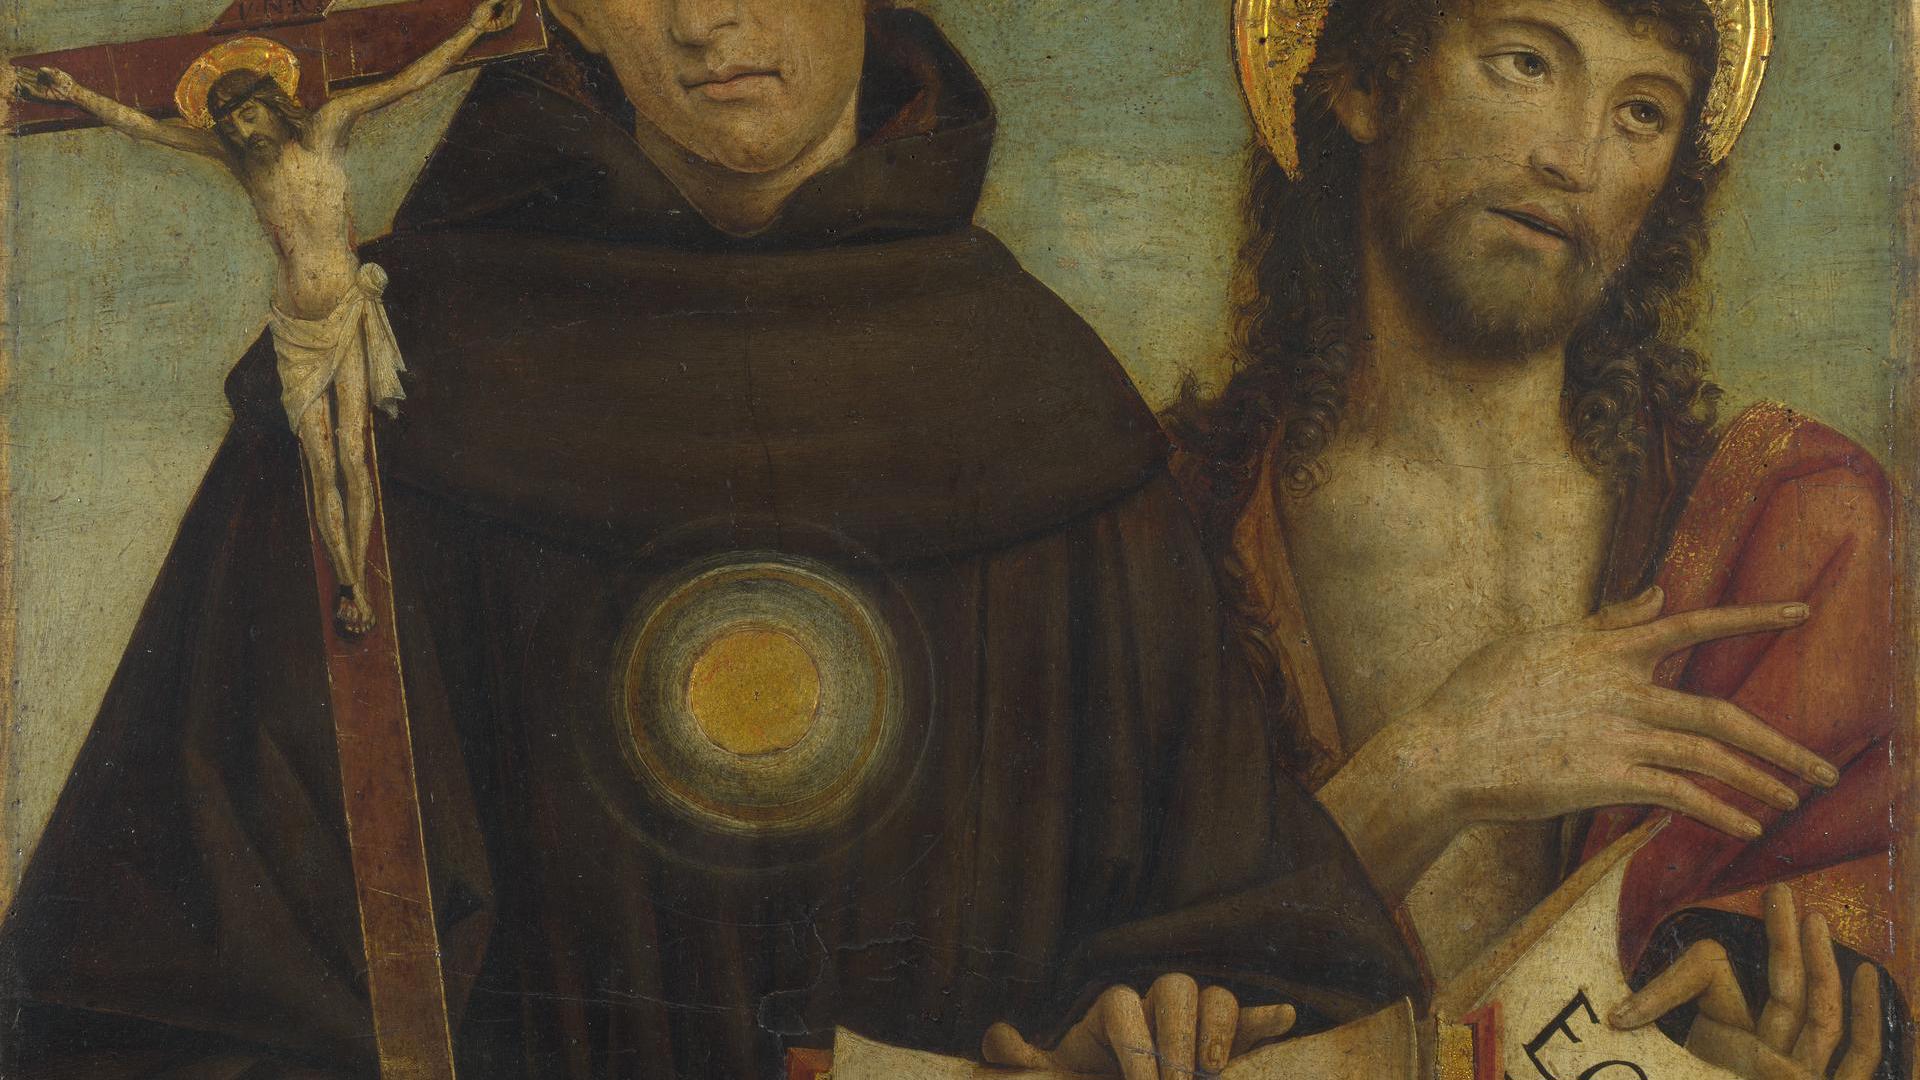 Saints Nicholas of Tolentino and John the Baptist by Giovanni Martino Spanzotti